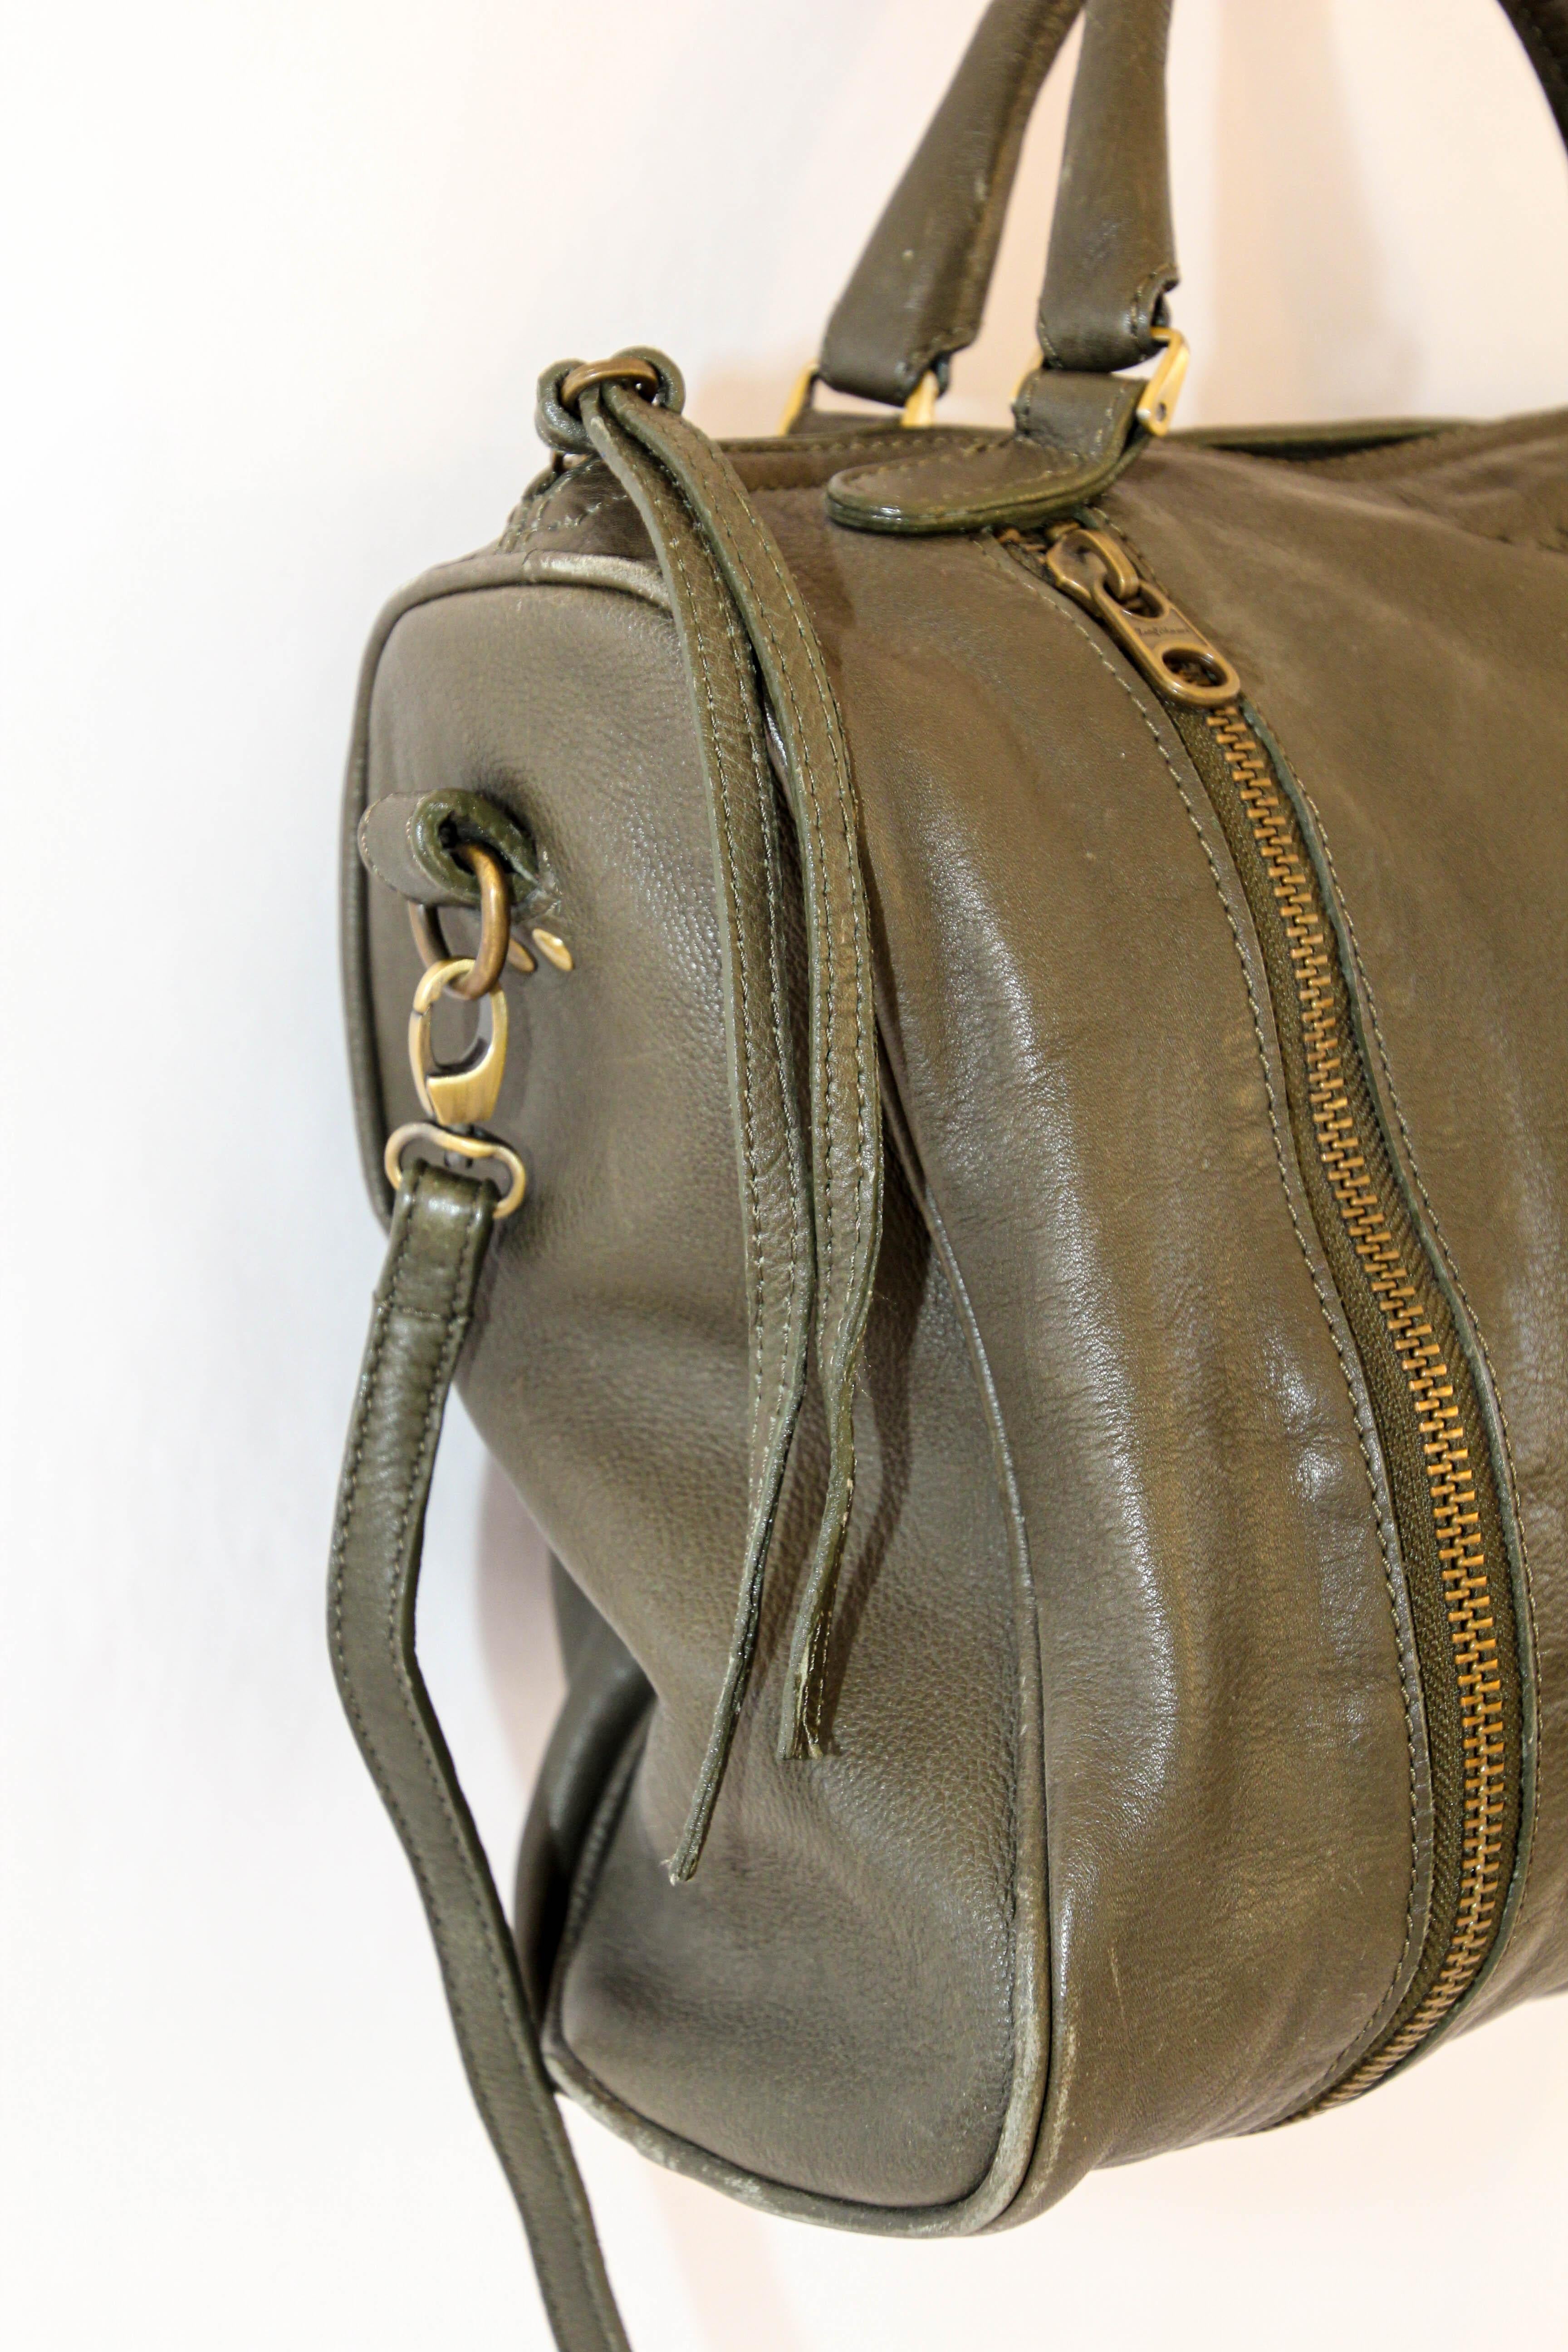 Zadig & Voltaire Sunny Leather Medium Tote Handbag For Sale 1